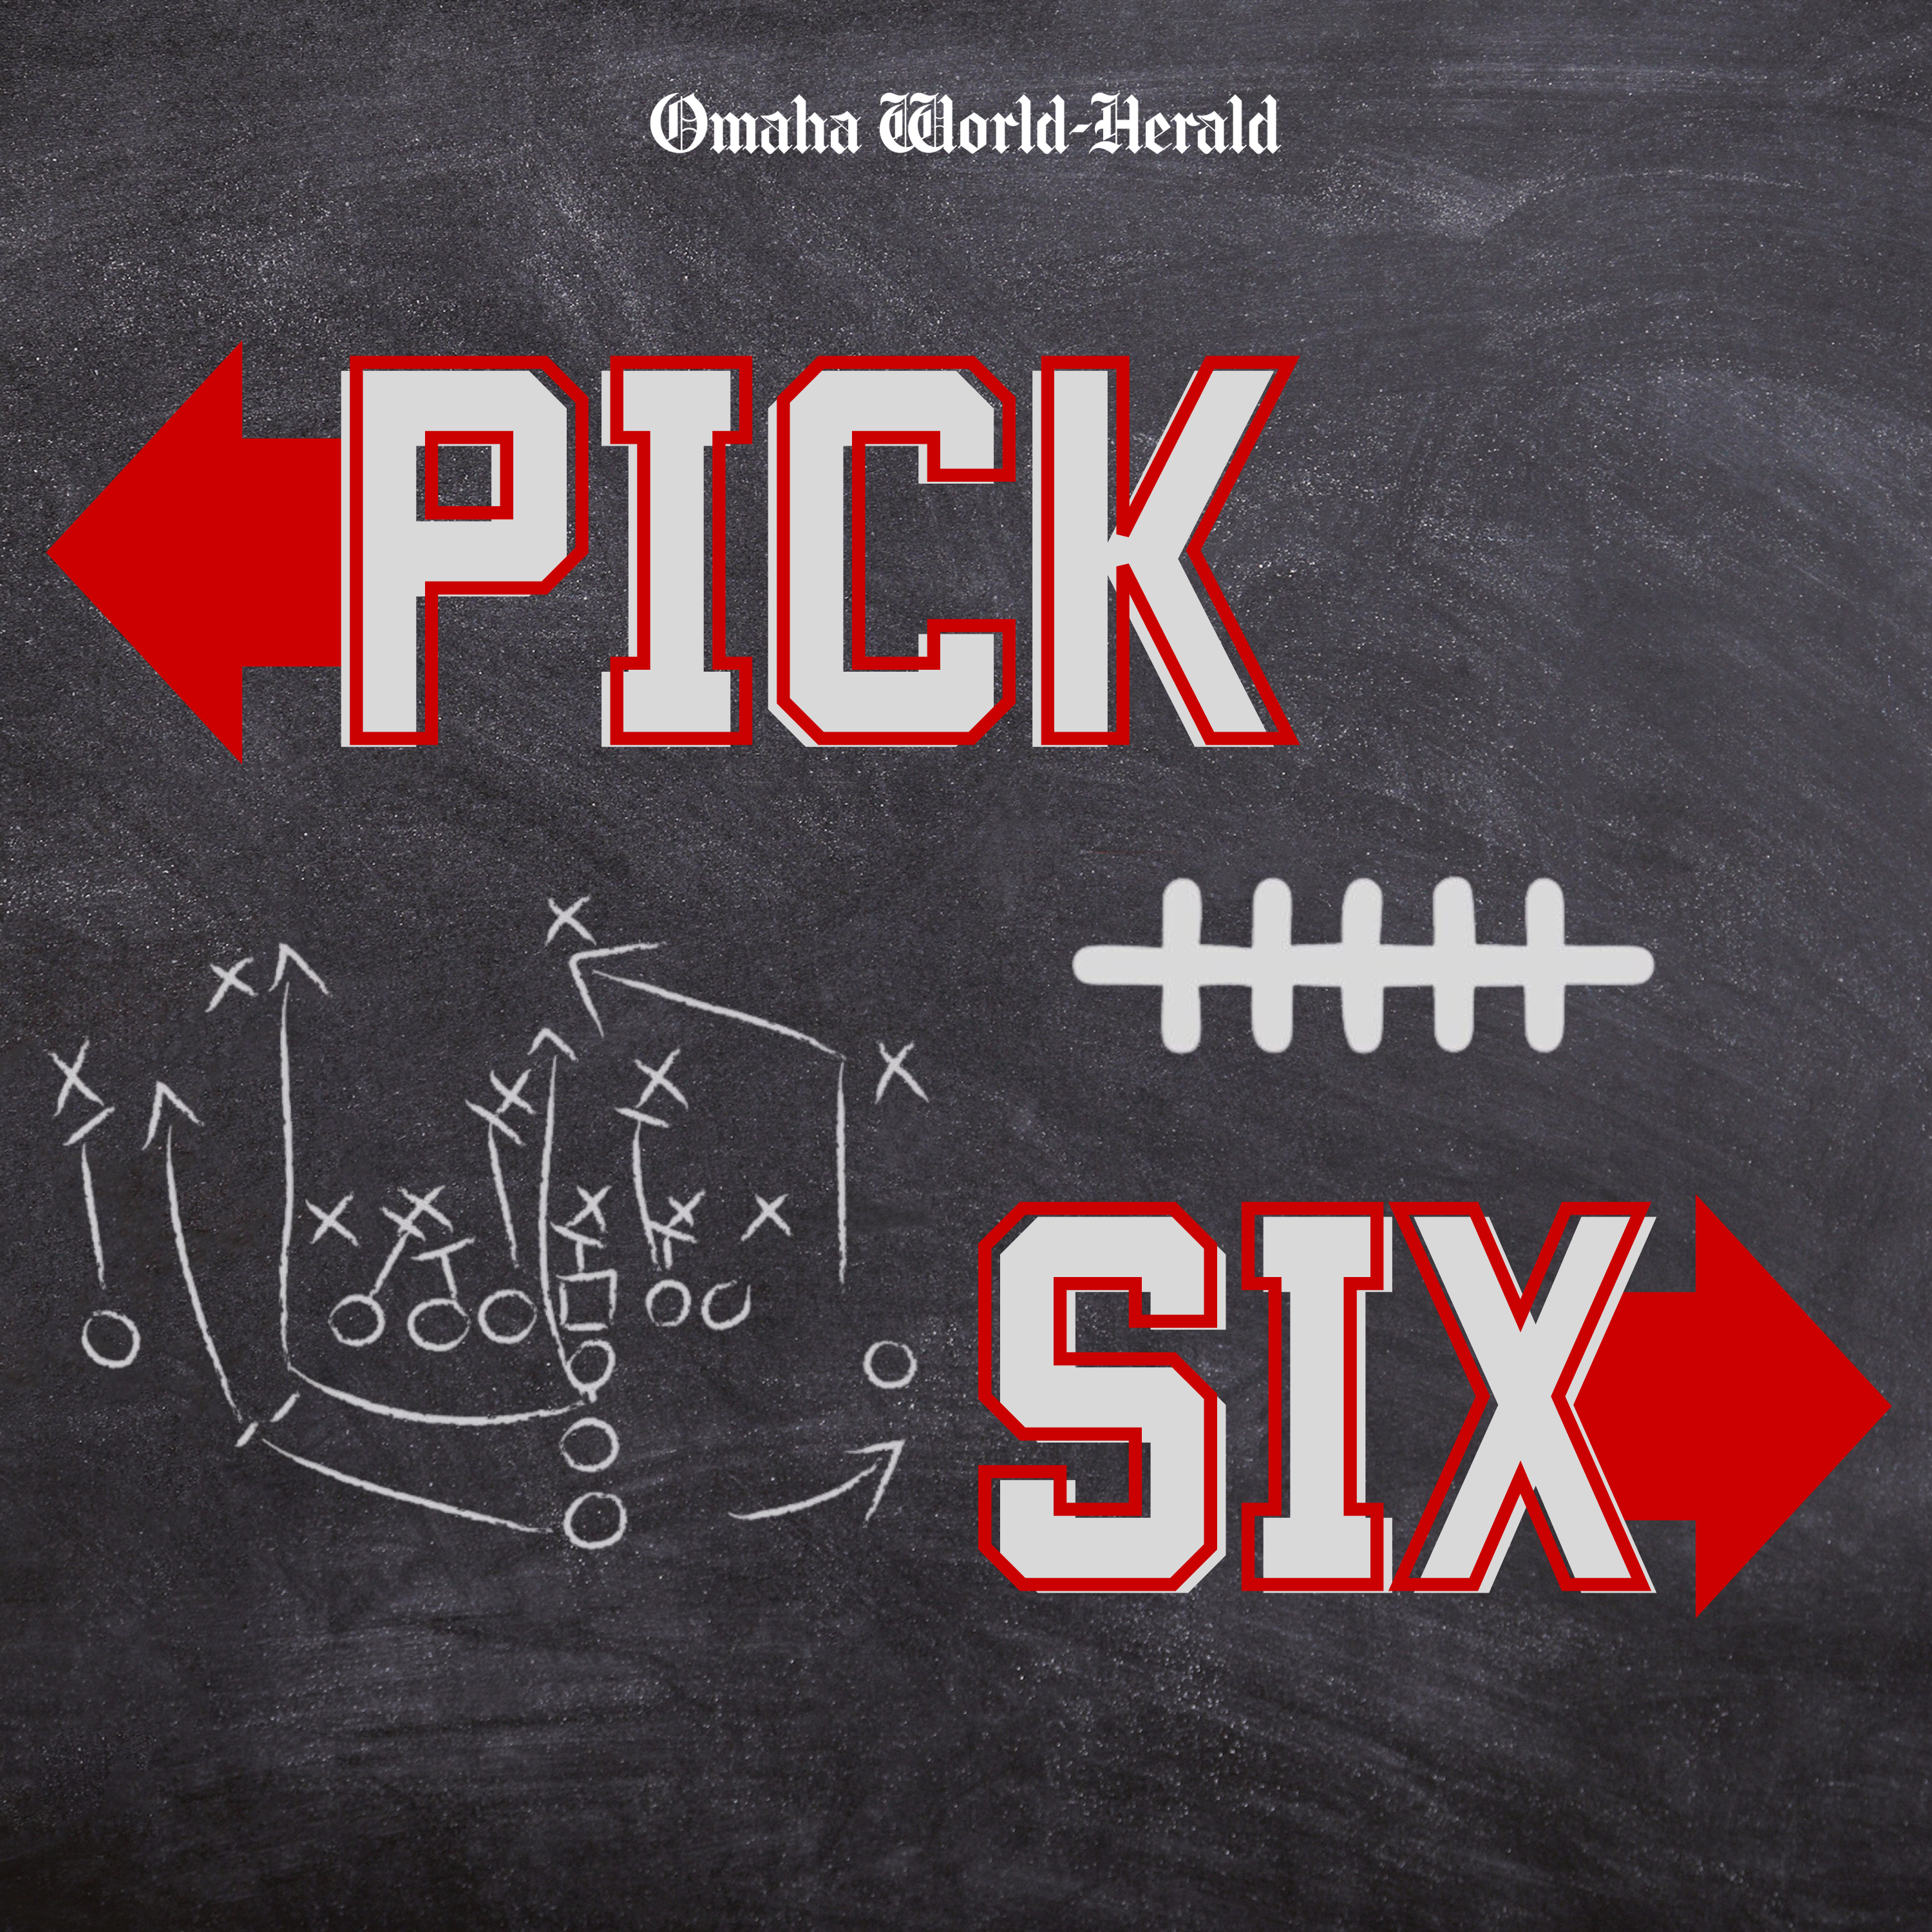 Nebraska's unprecedentedly bad quarterback play with Dirk Chatelain